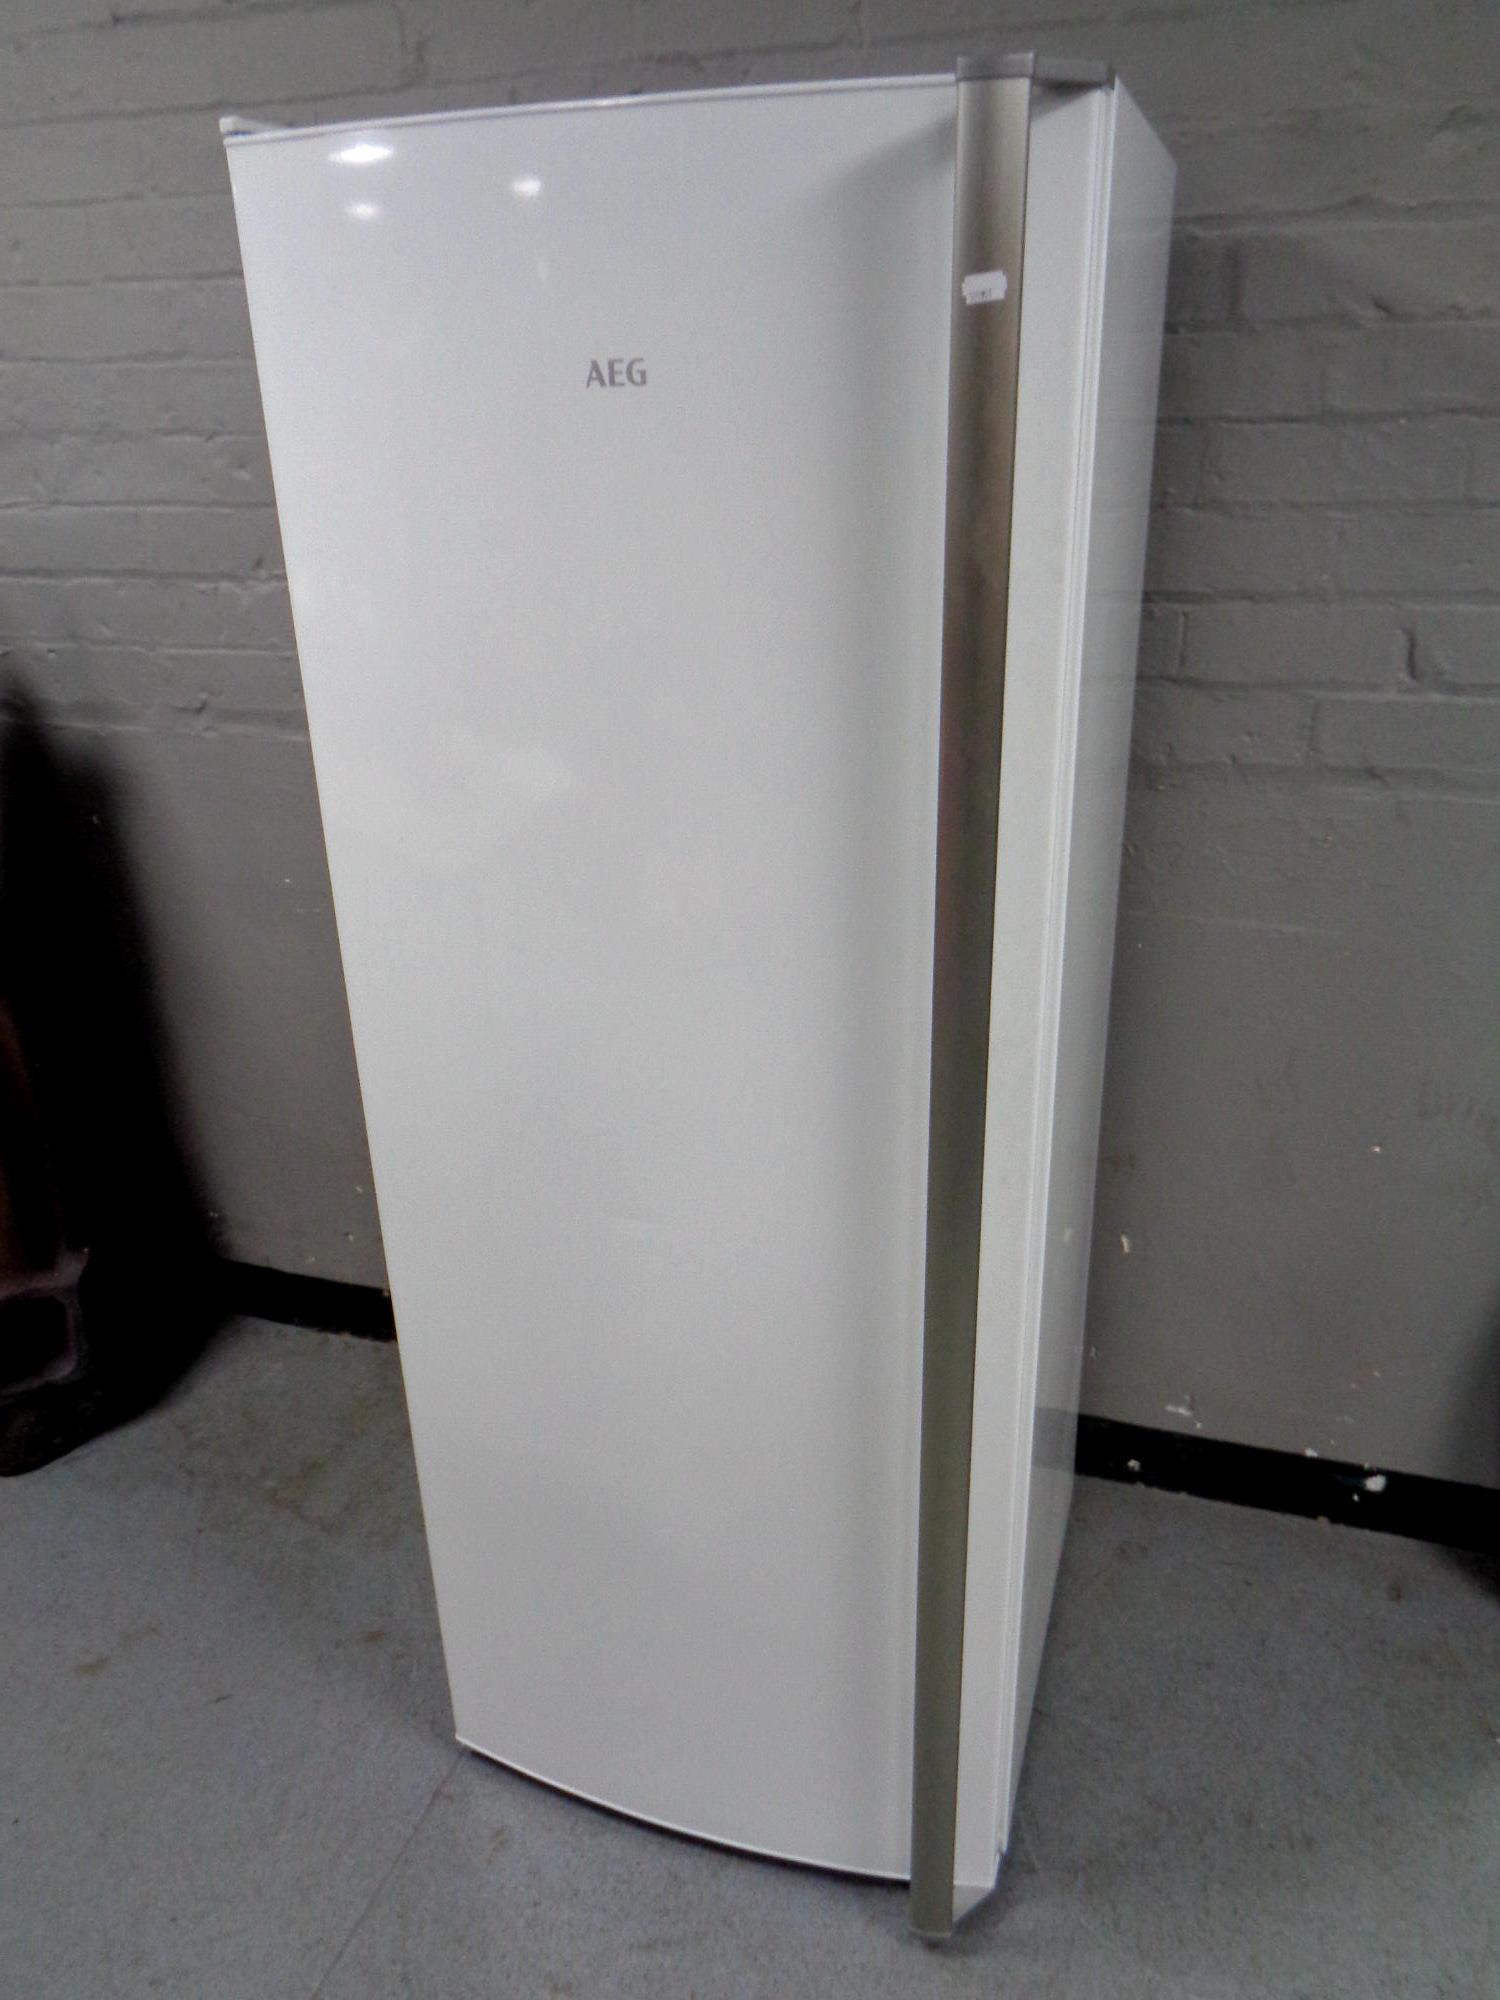 An AEG upright freezer